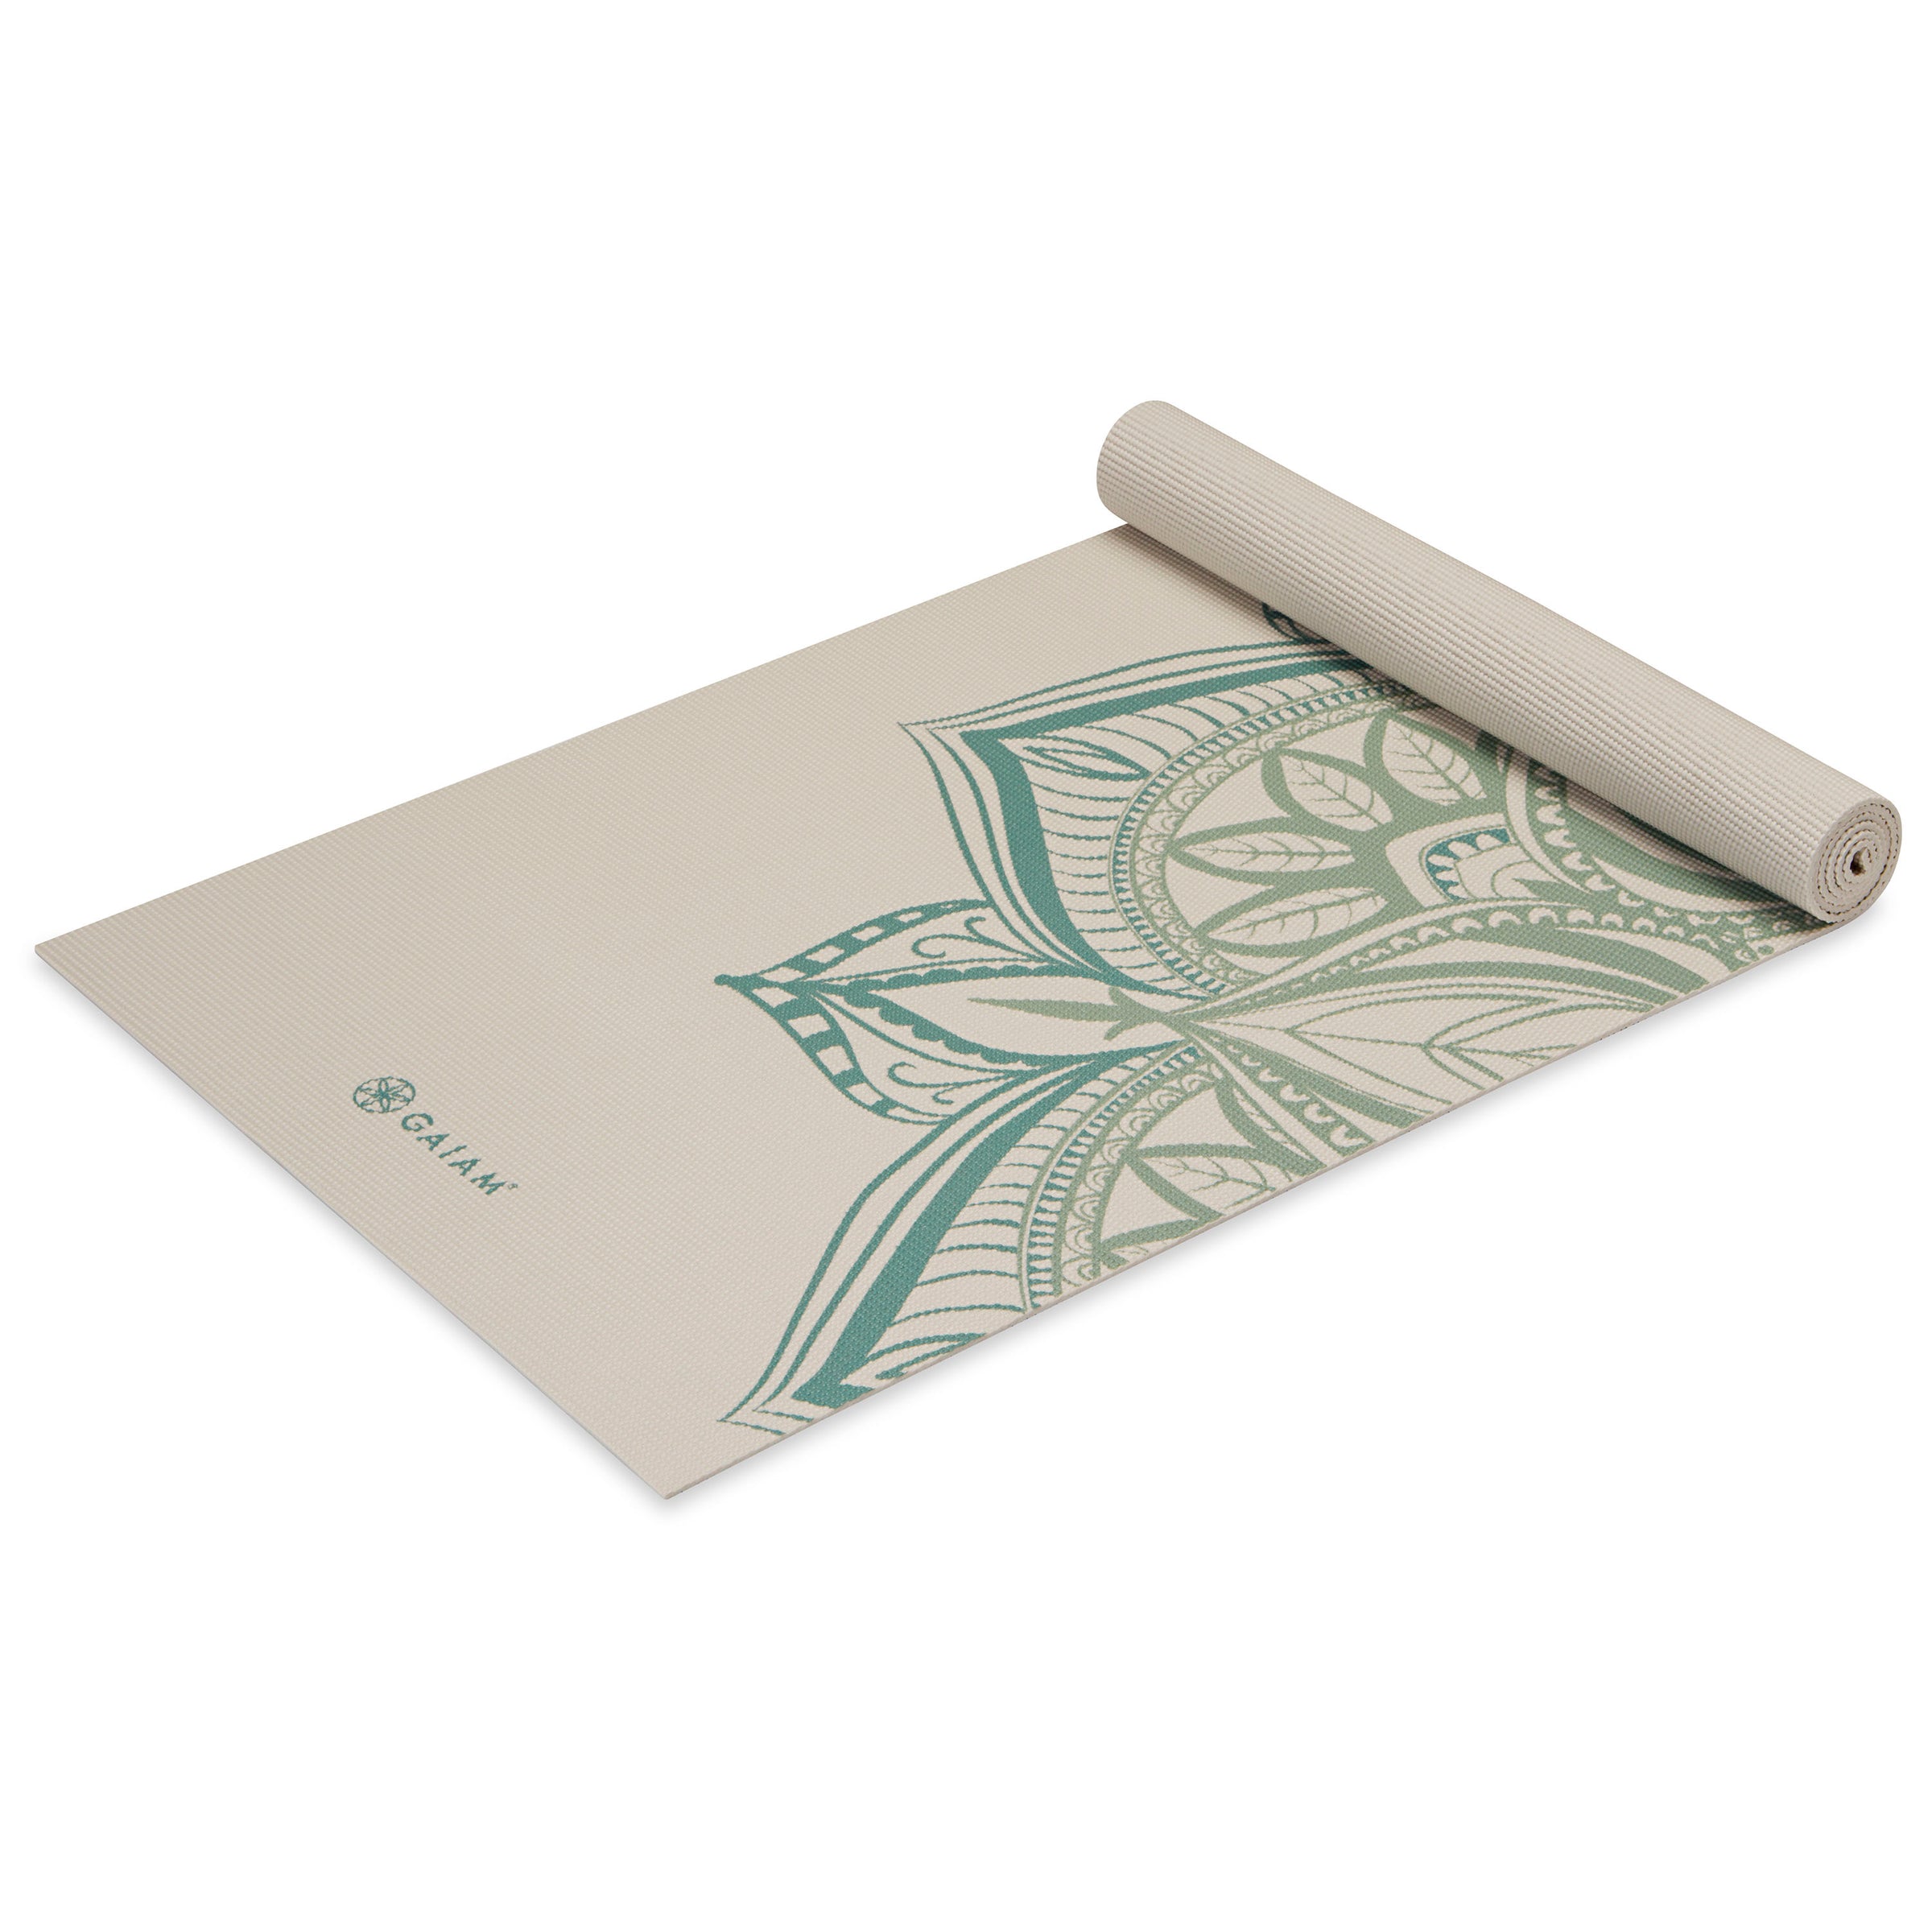 Evolve by Gaiam 5mm Printed Yoga Mat, Mint Marrakesh, PVC - Swico